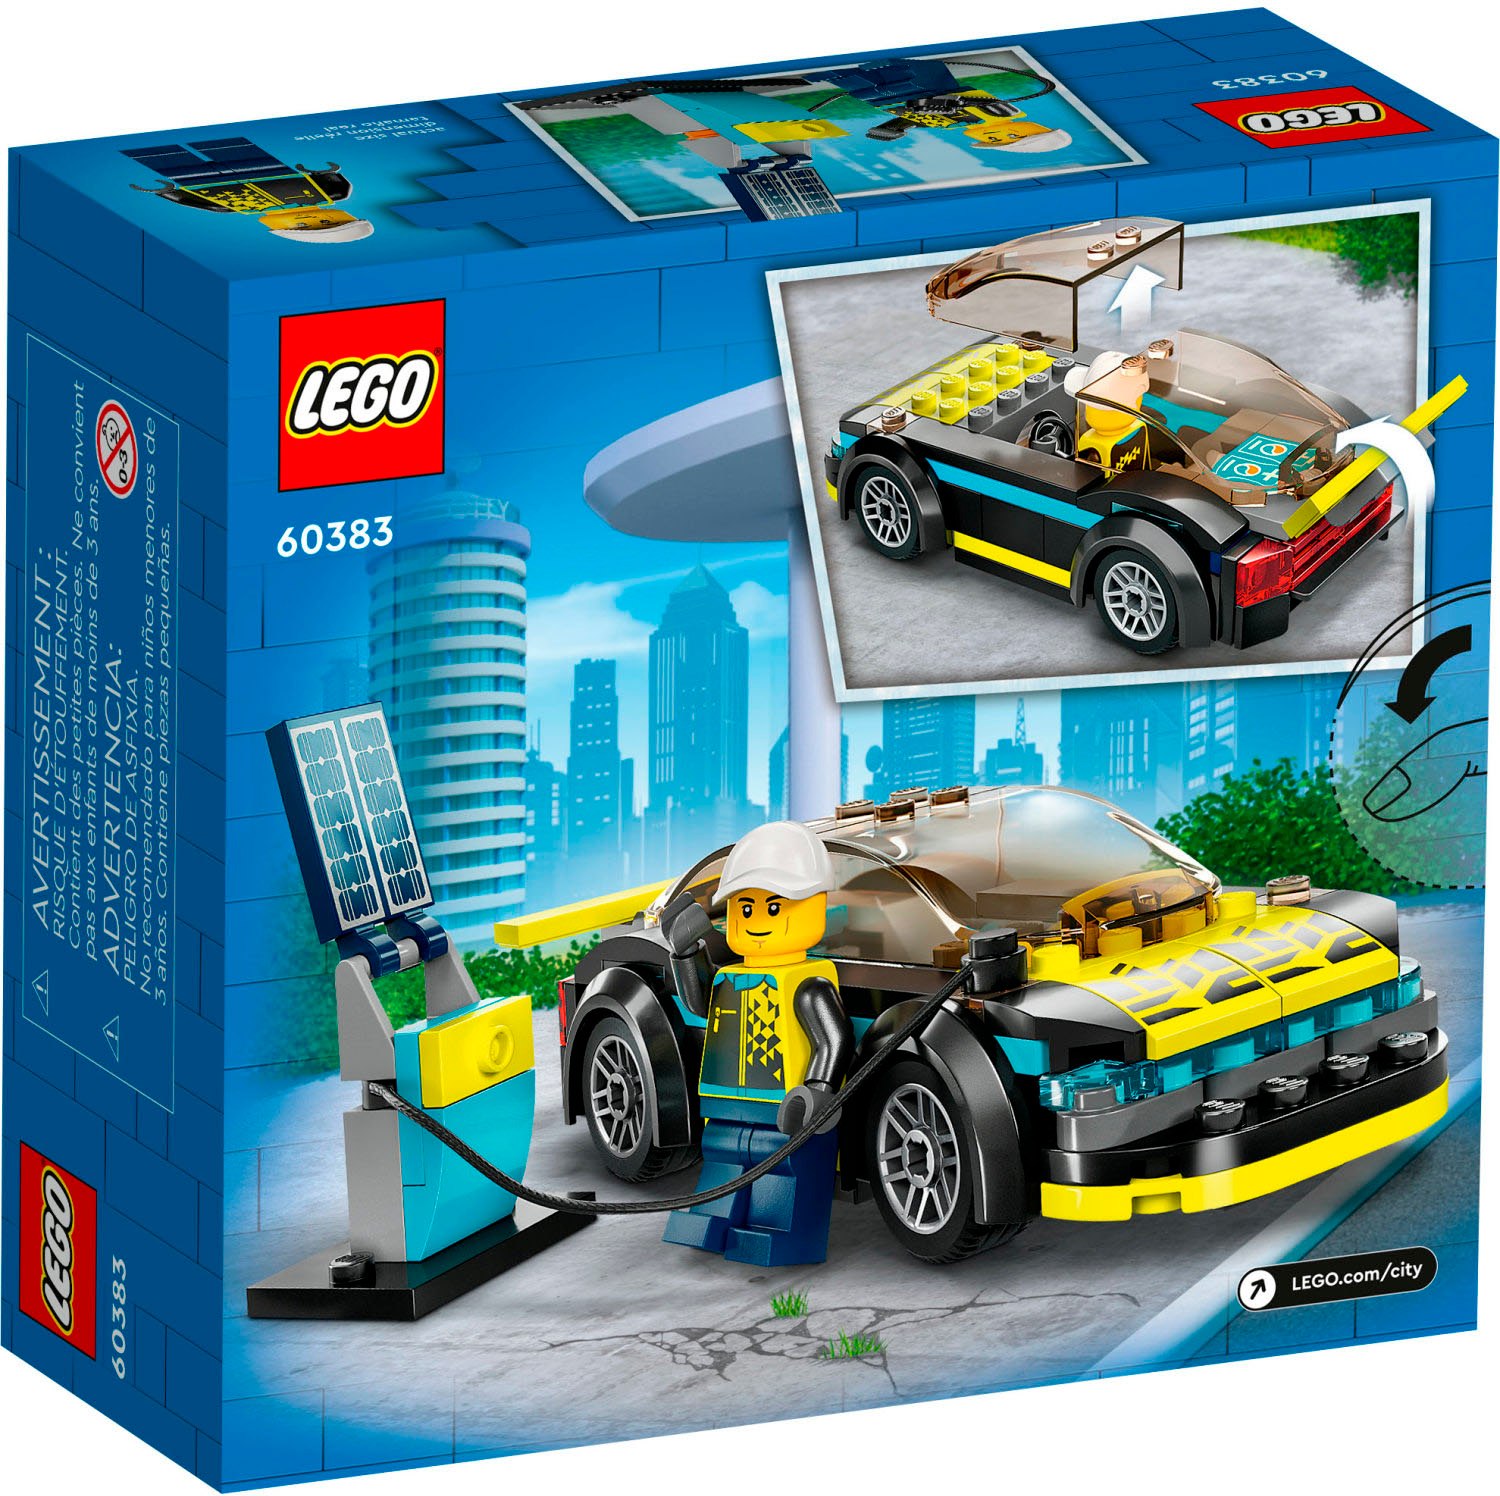 LEGO City Sports 60383 - Buy